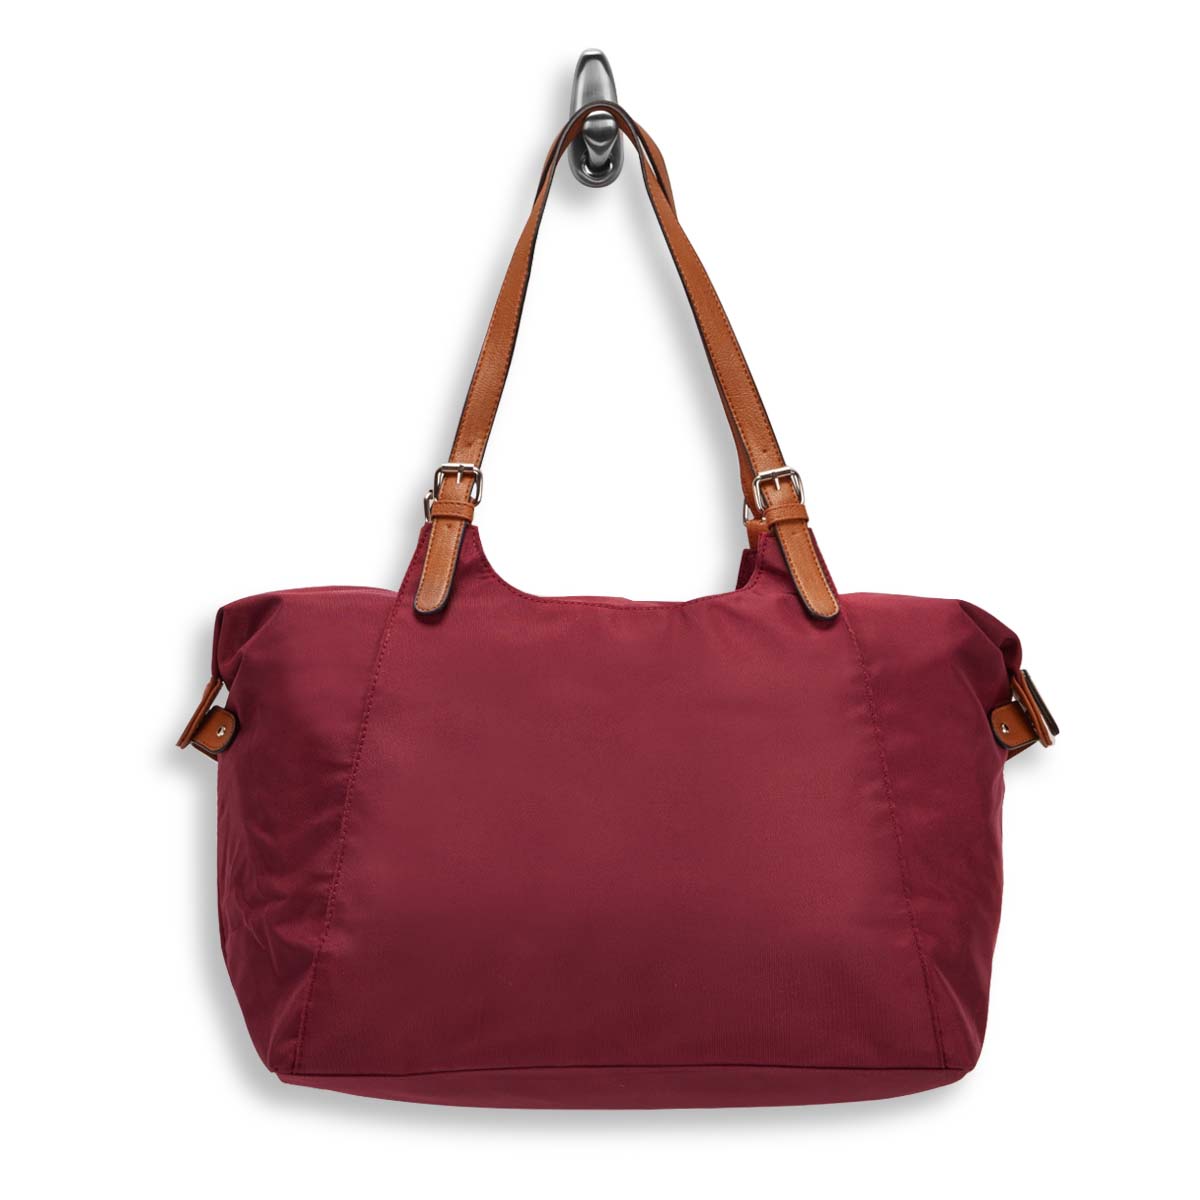 Women's R4700 burgundy large tote bag